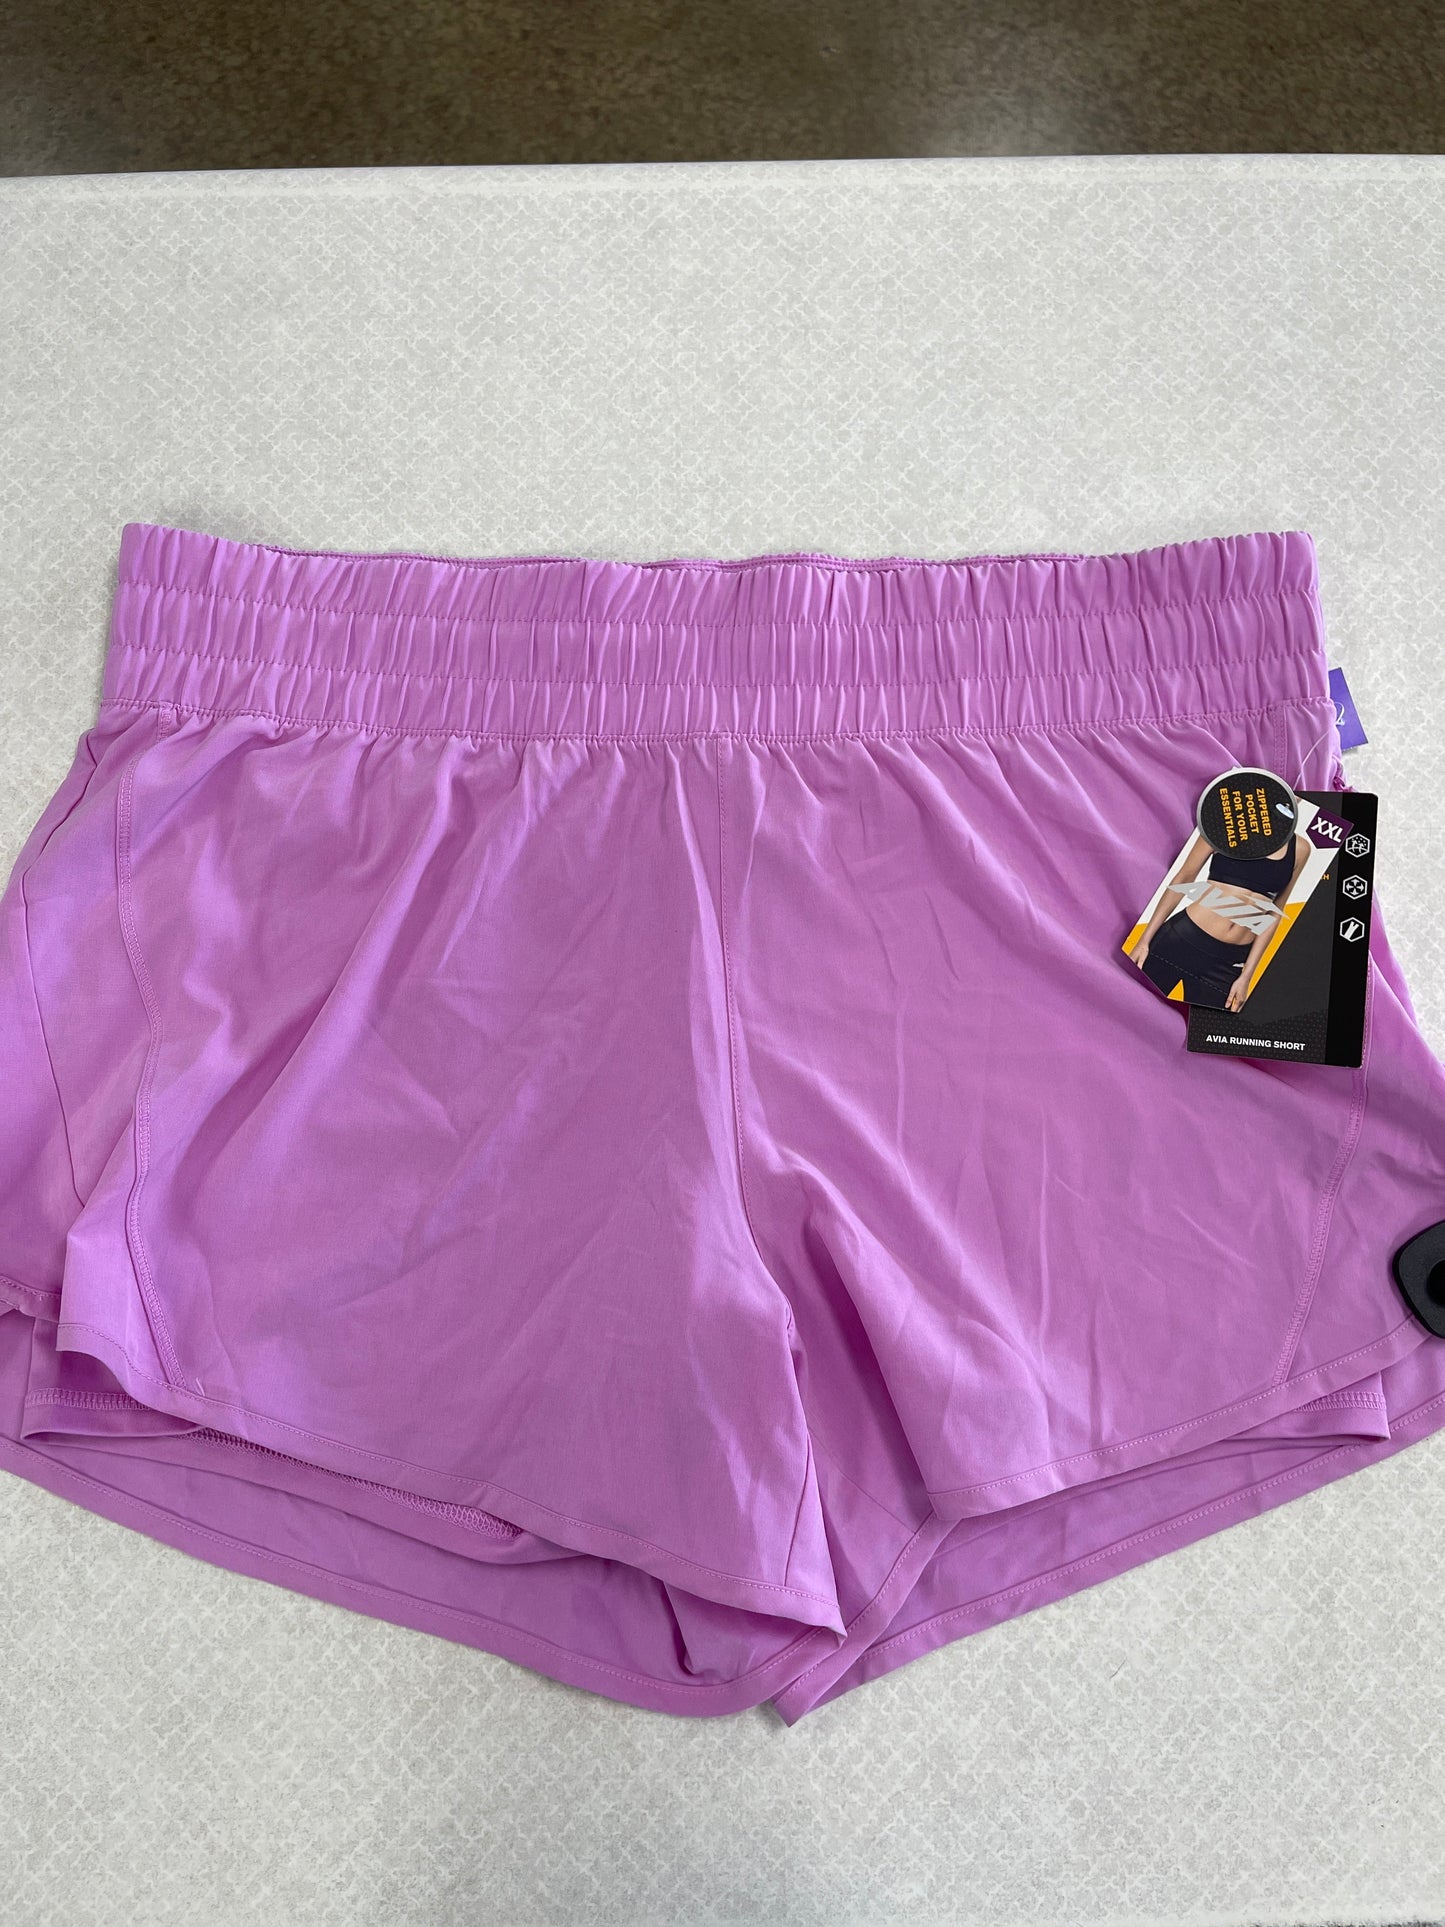 Pink Athletic Shorts Avia, Size Xxl